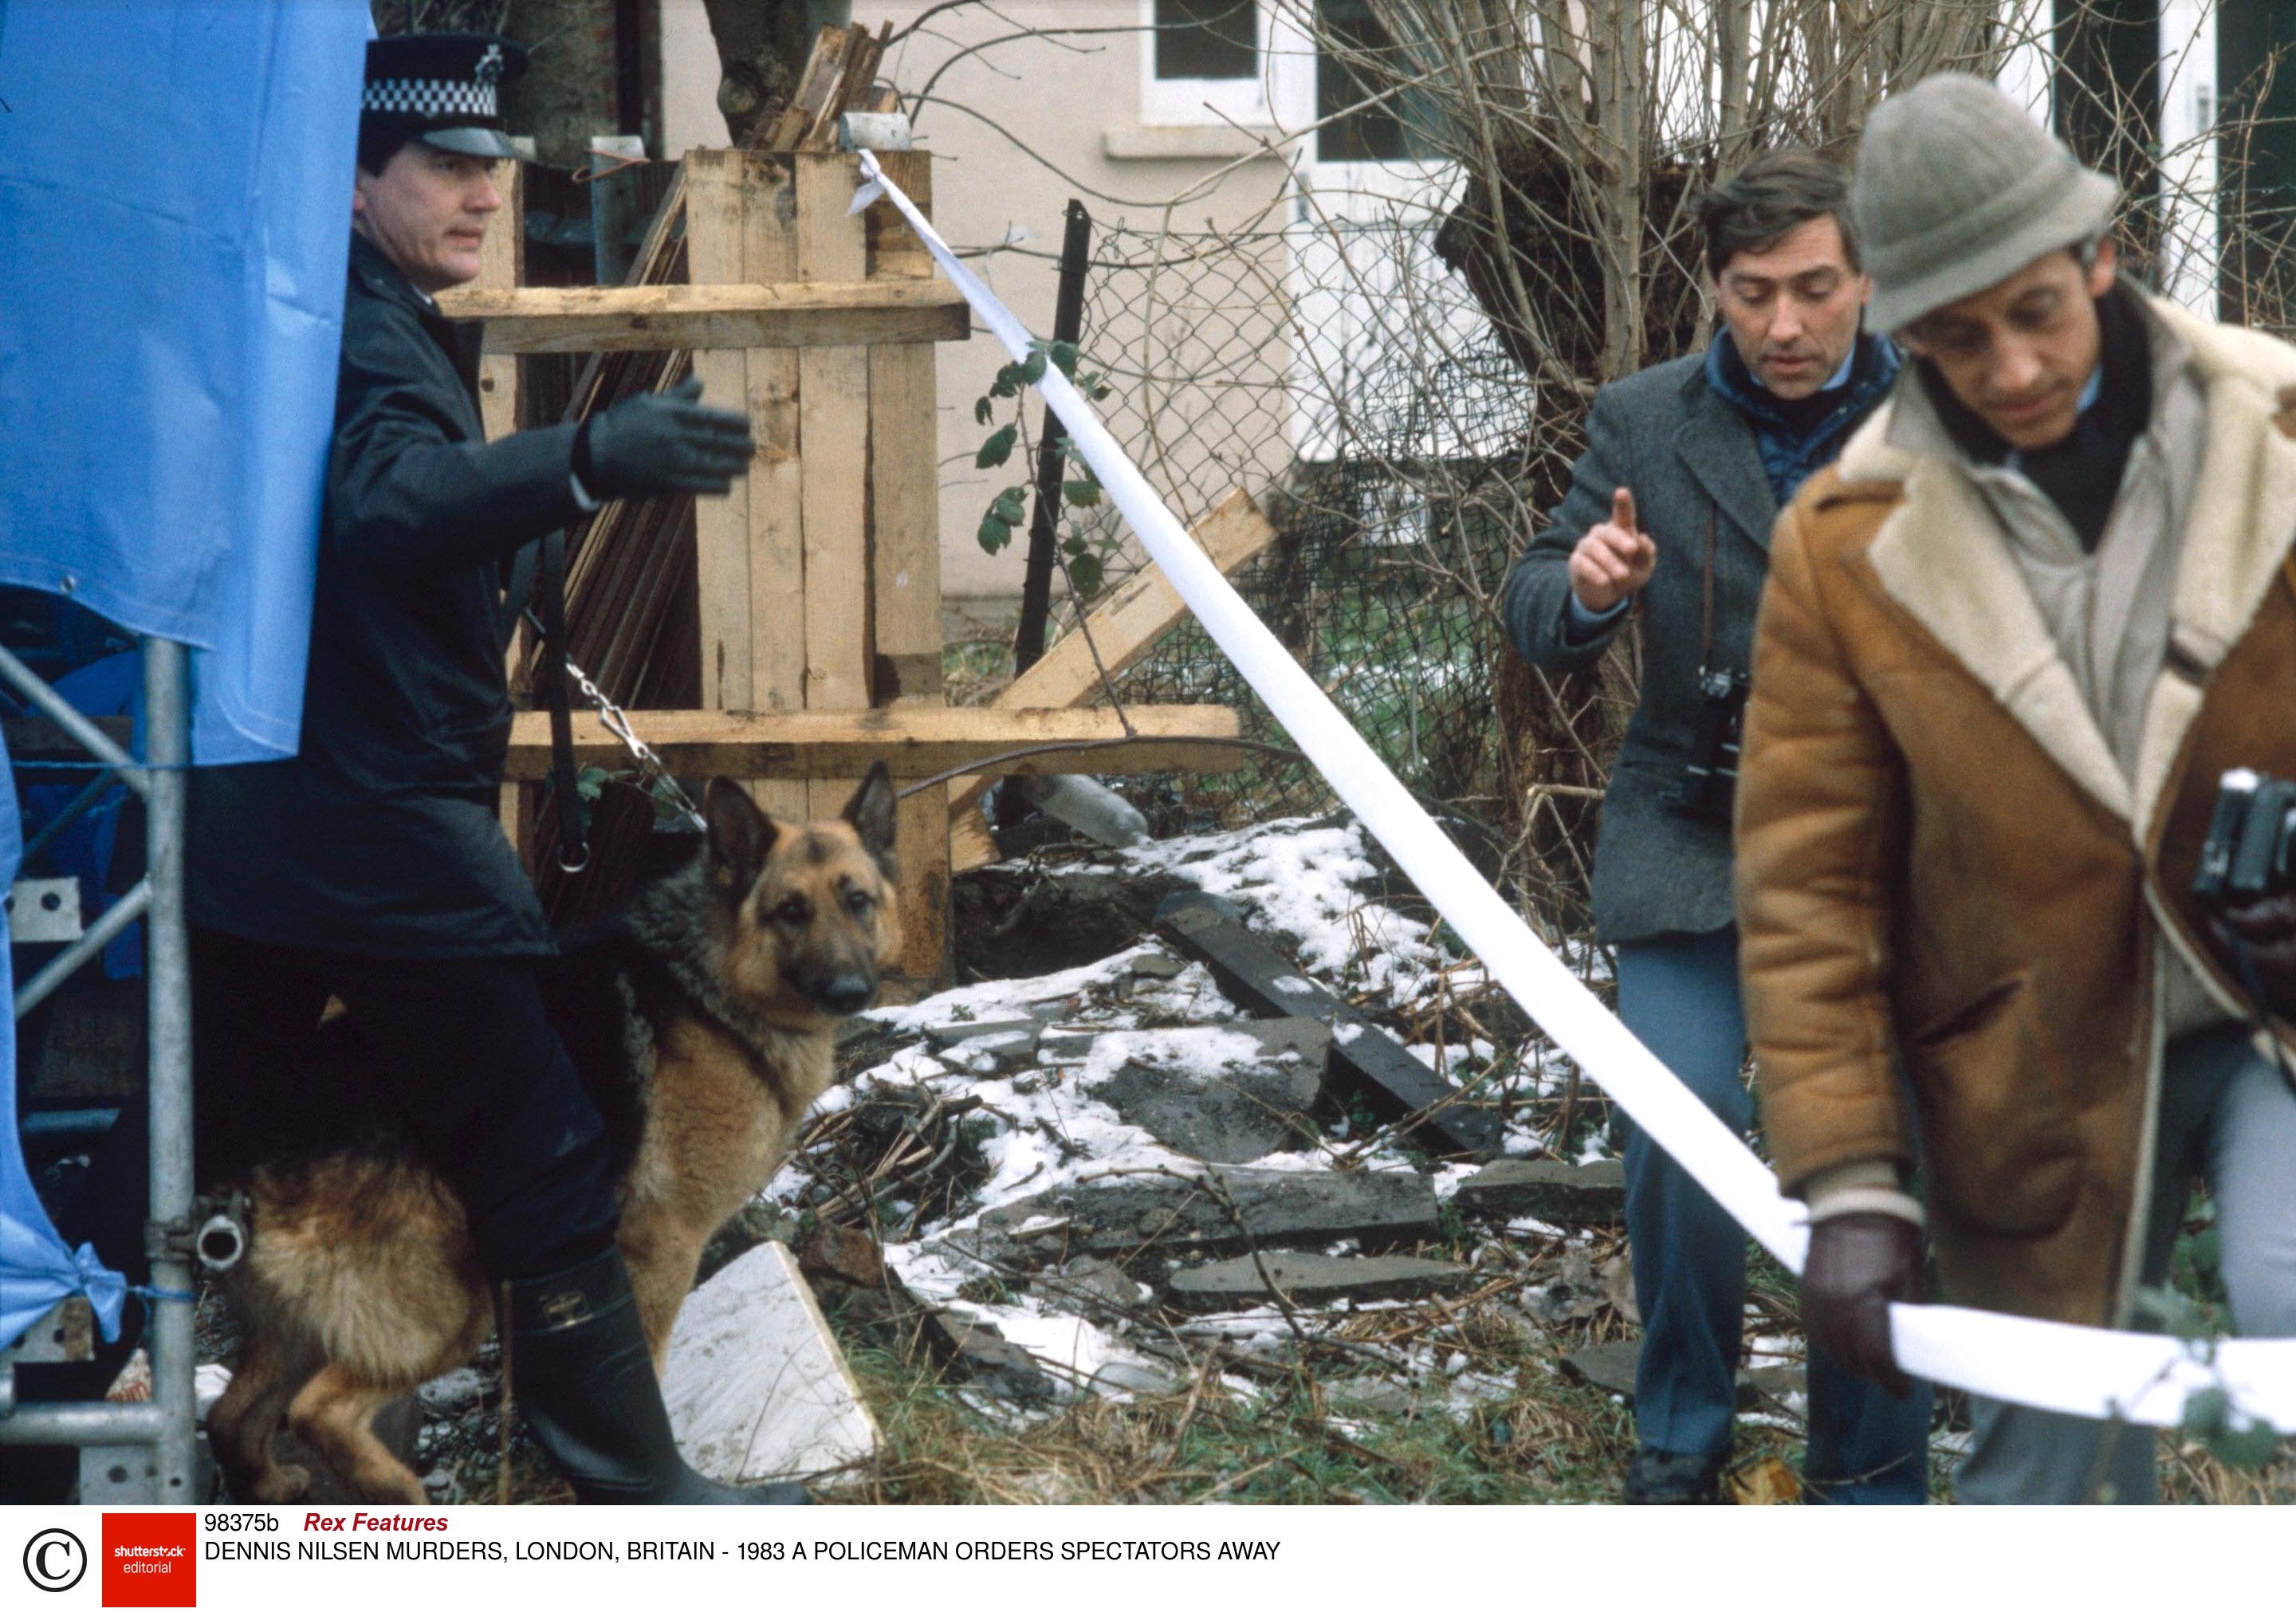 Policeman orders spectators away at Nilsen crime scene in 1983